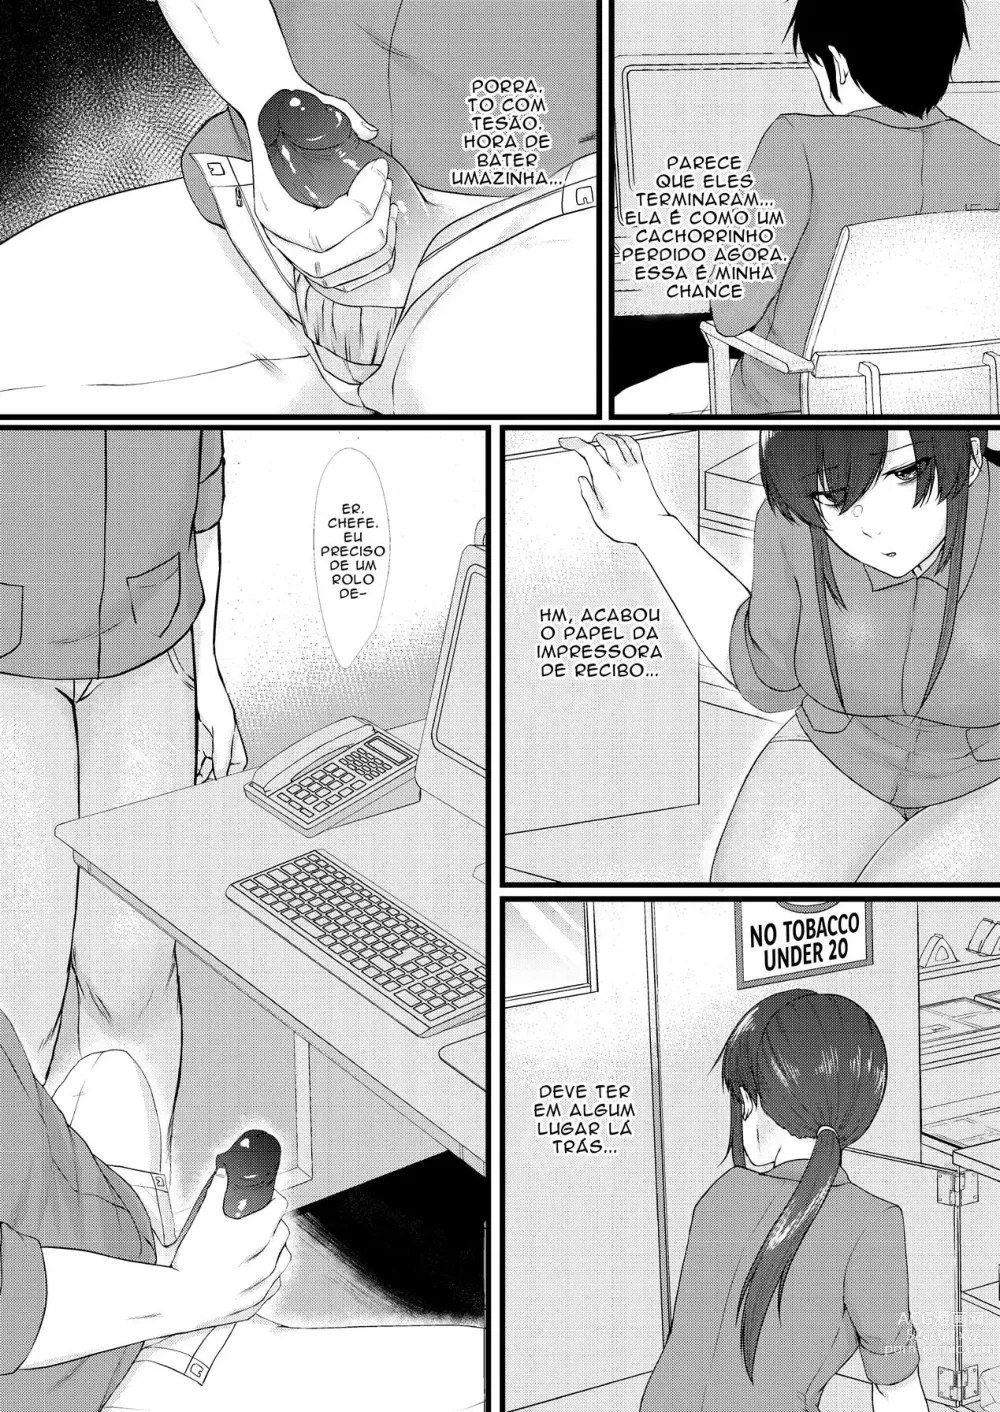 Page 6 of doujinshi A esse ponto